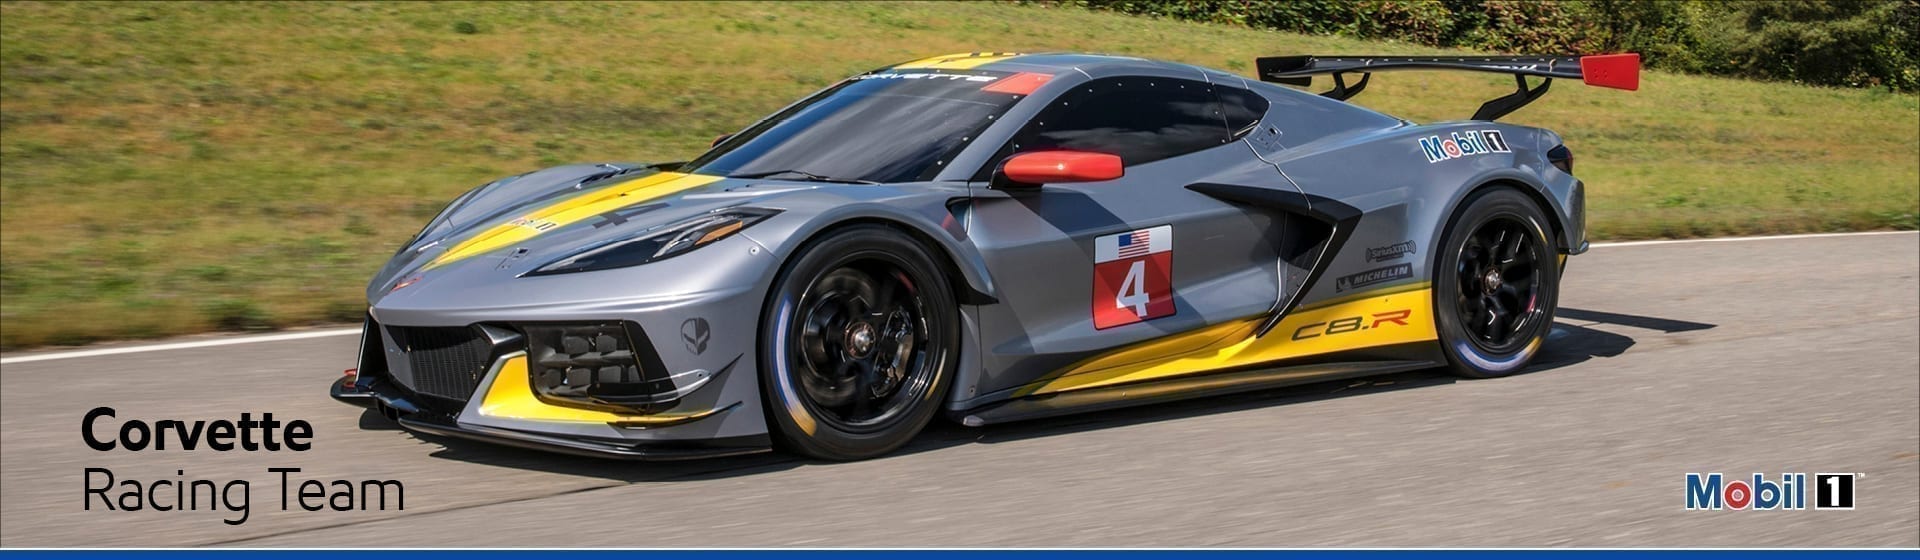 M1 - Web_Heroes-2020_Motorsport-CorvetteRacingTeam